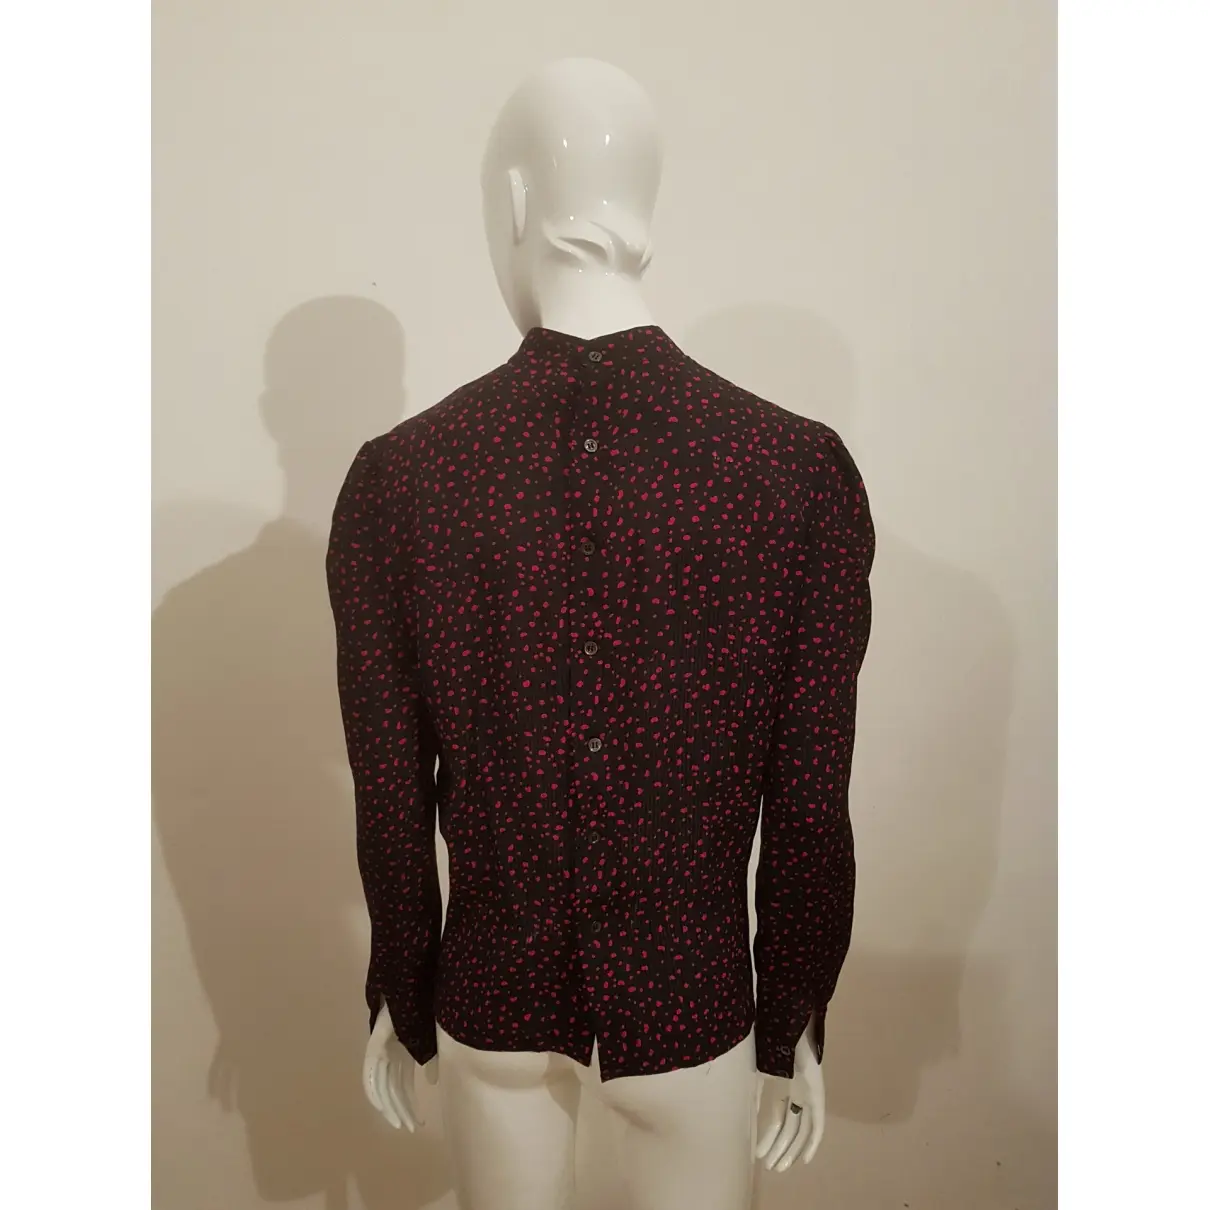 Buy Loris Azzaro Silk blouse online - Vintage